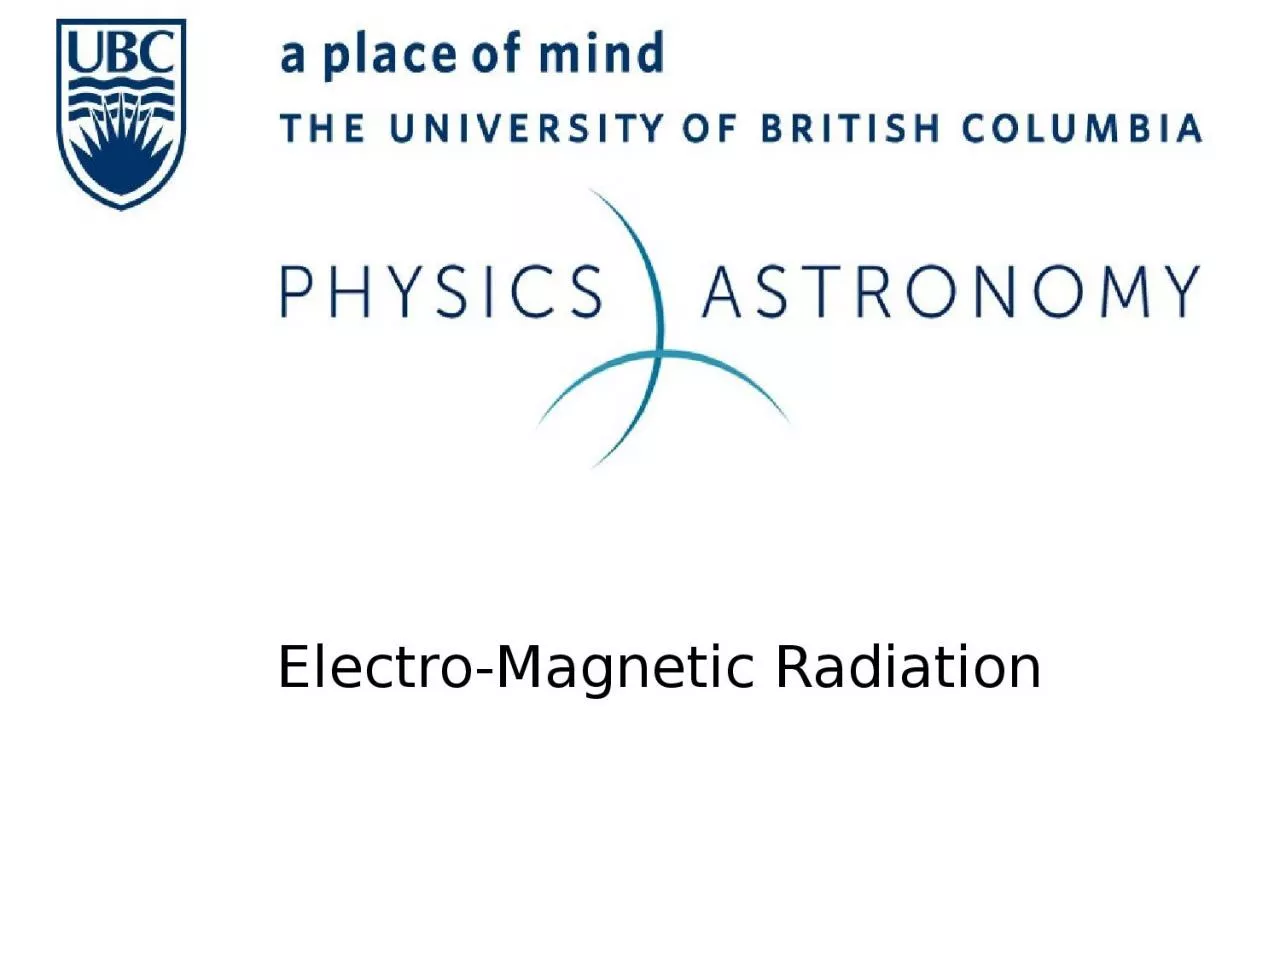 Electro-Magnetic Radiation